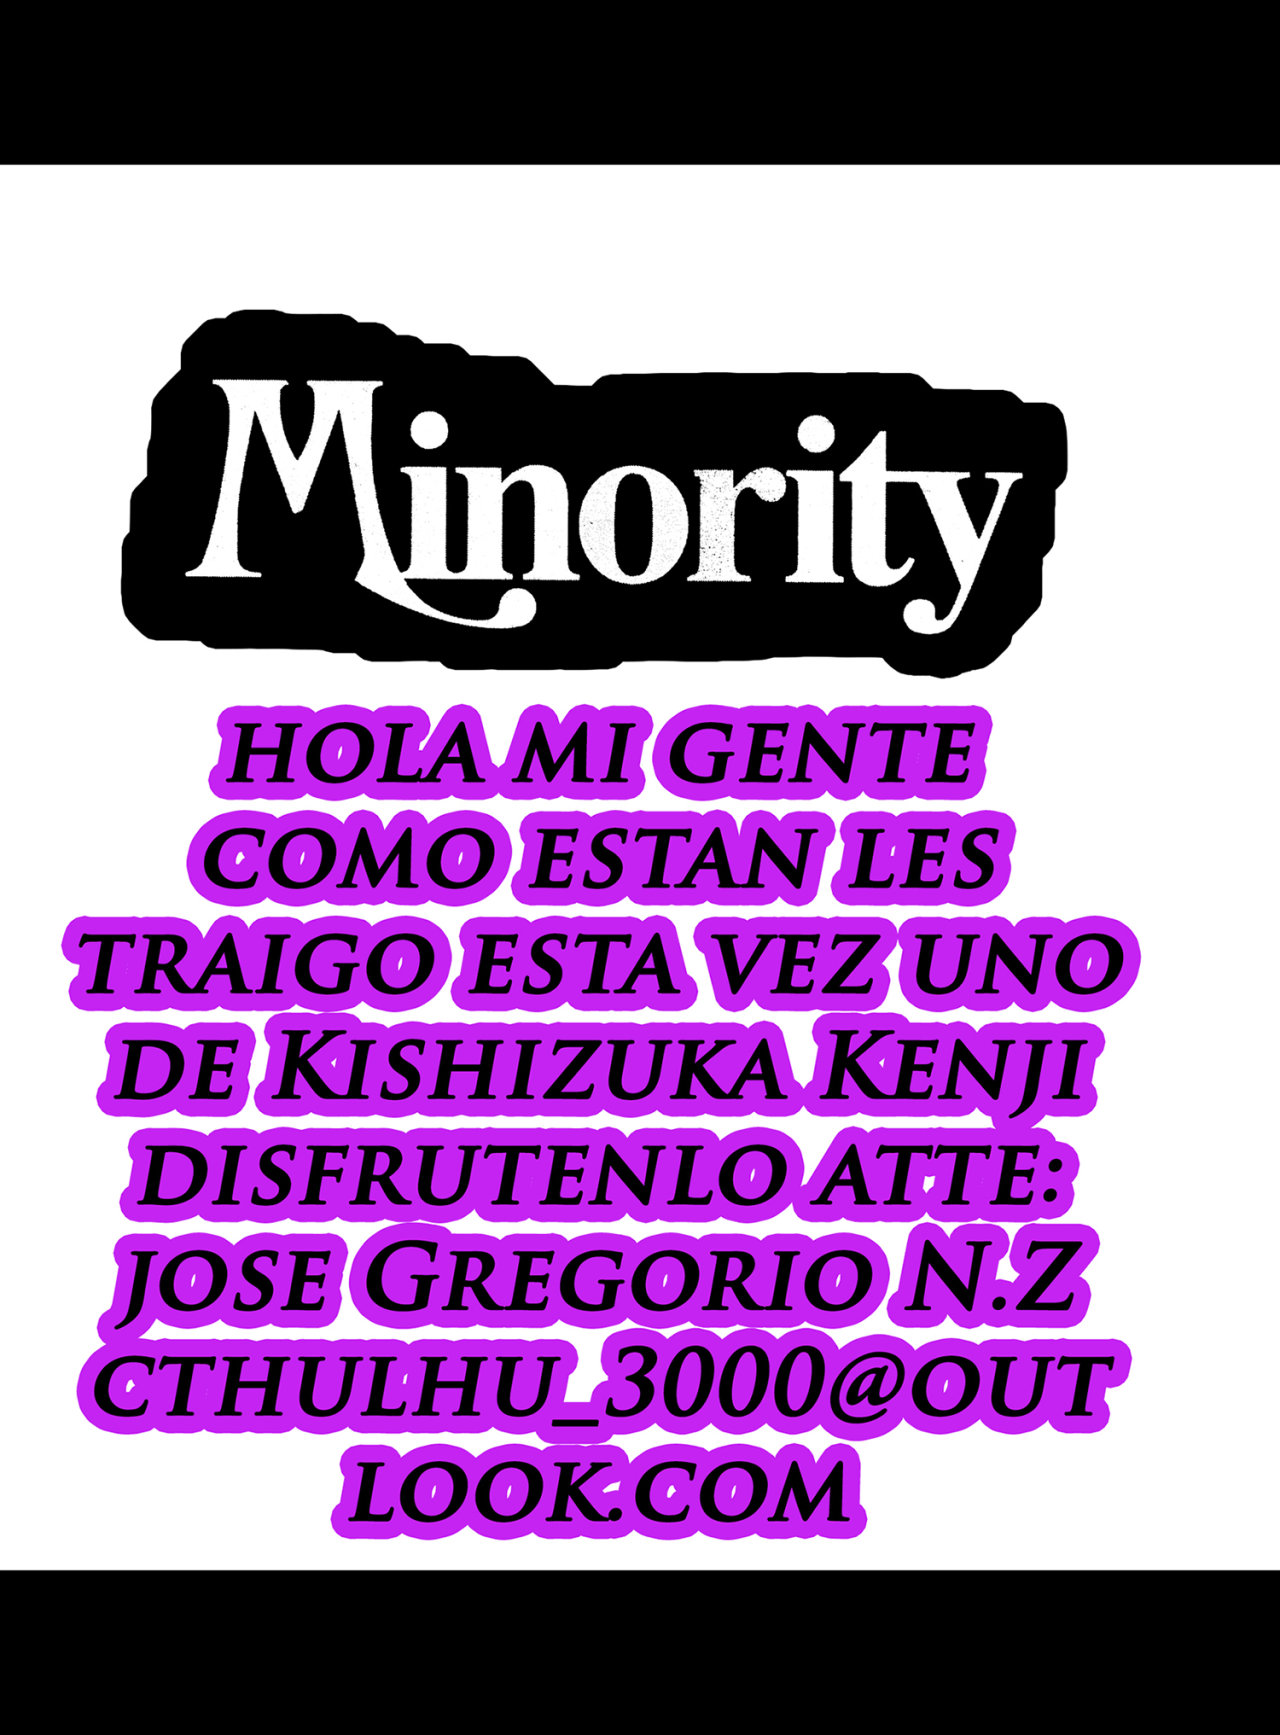 Minority - 24